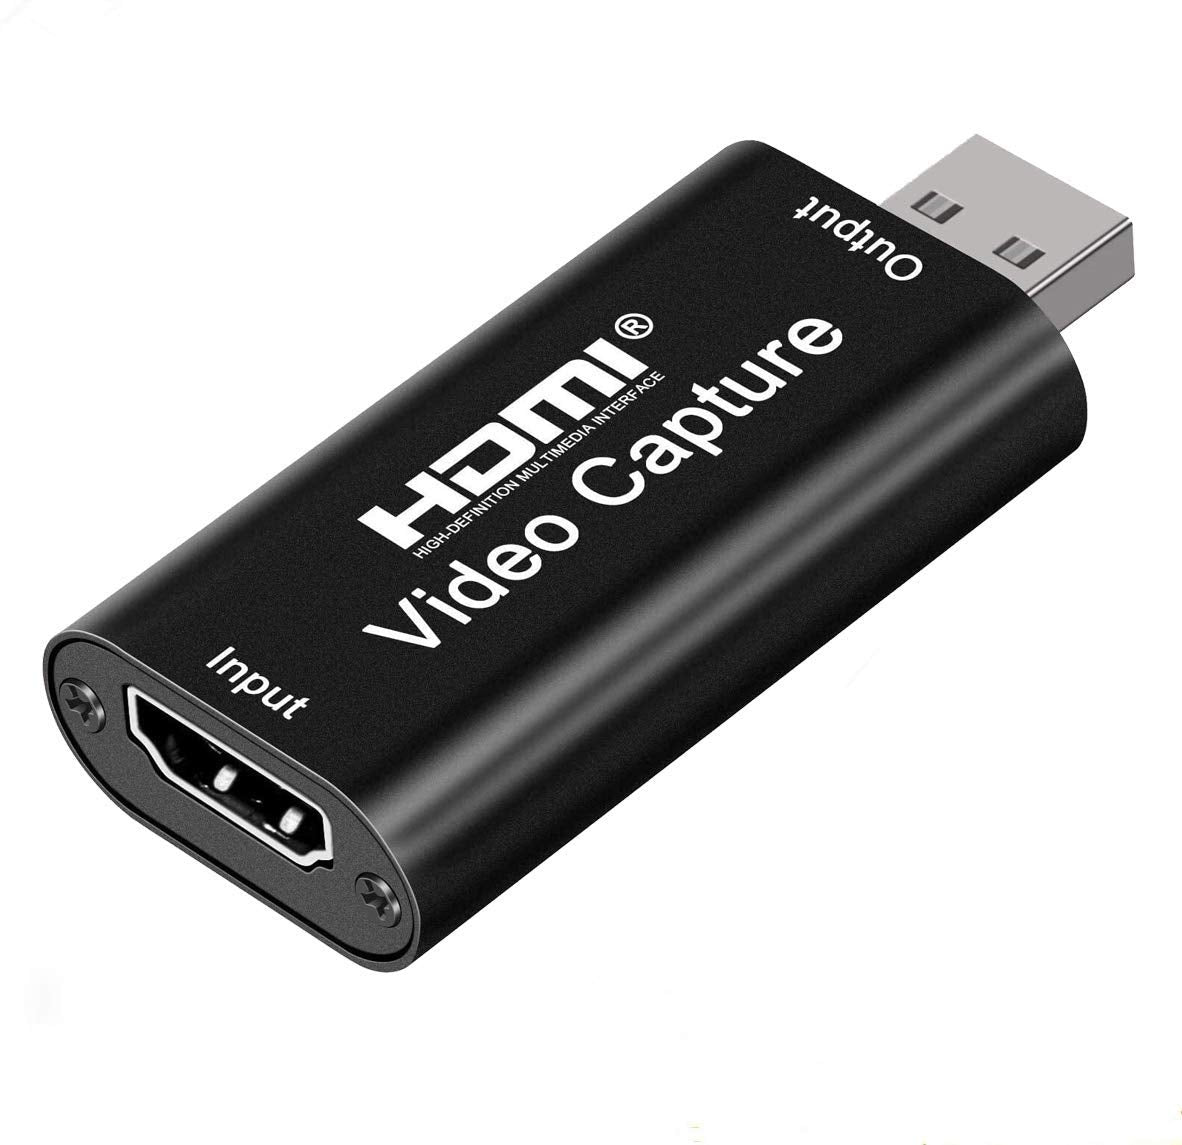 HDMI to USB Video Capture Card USB 2.0 1080P